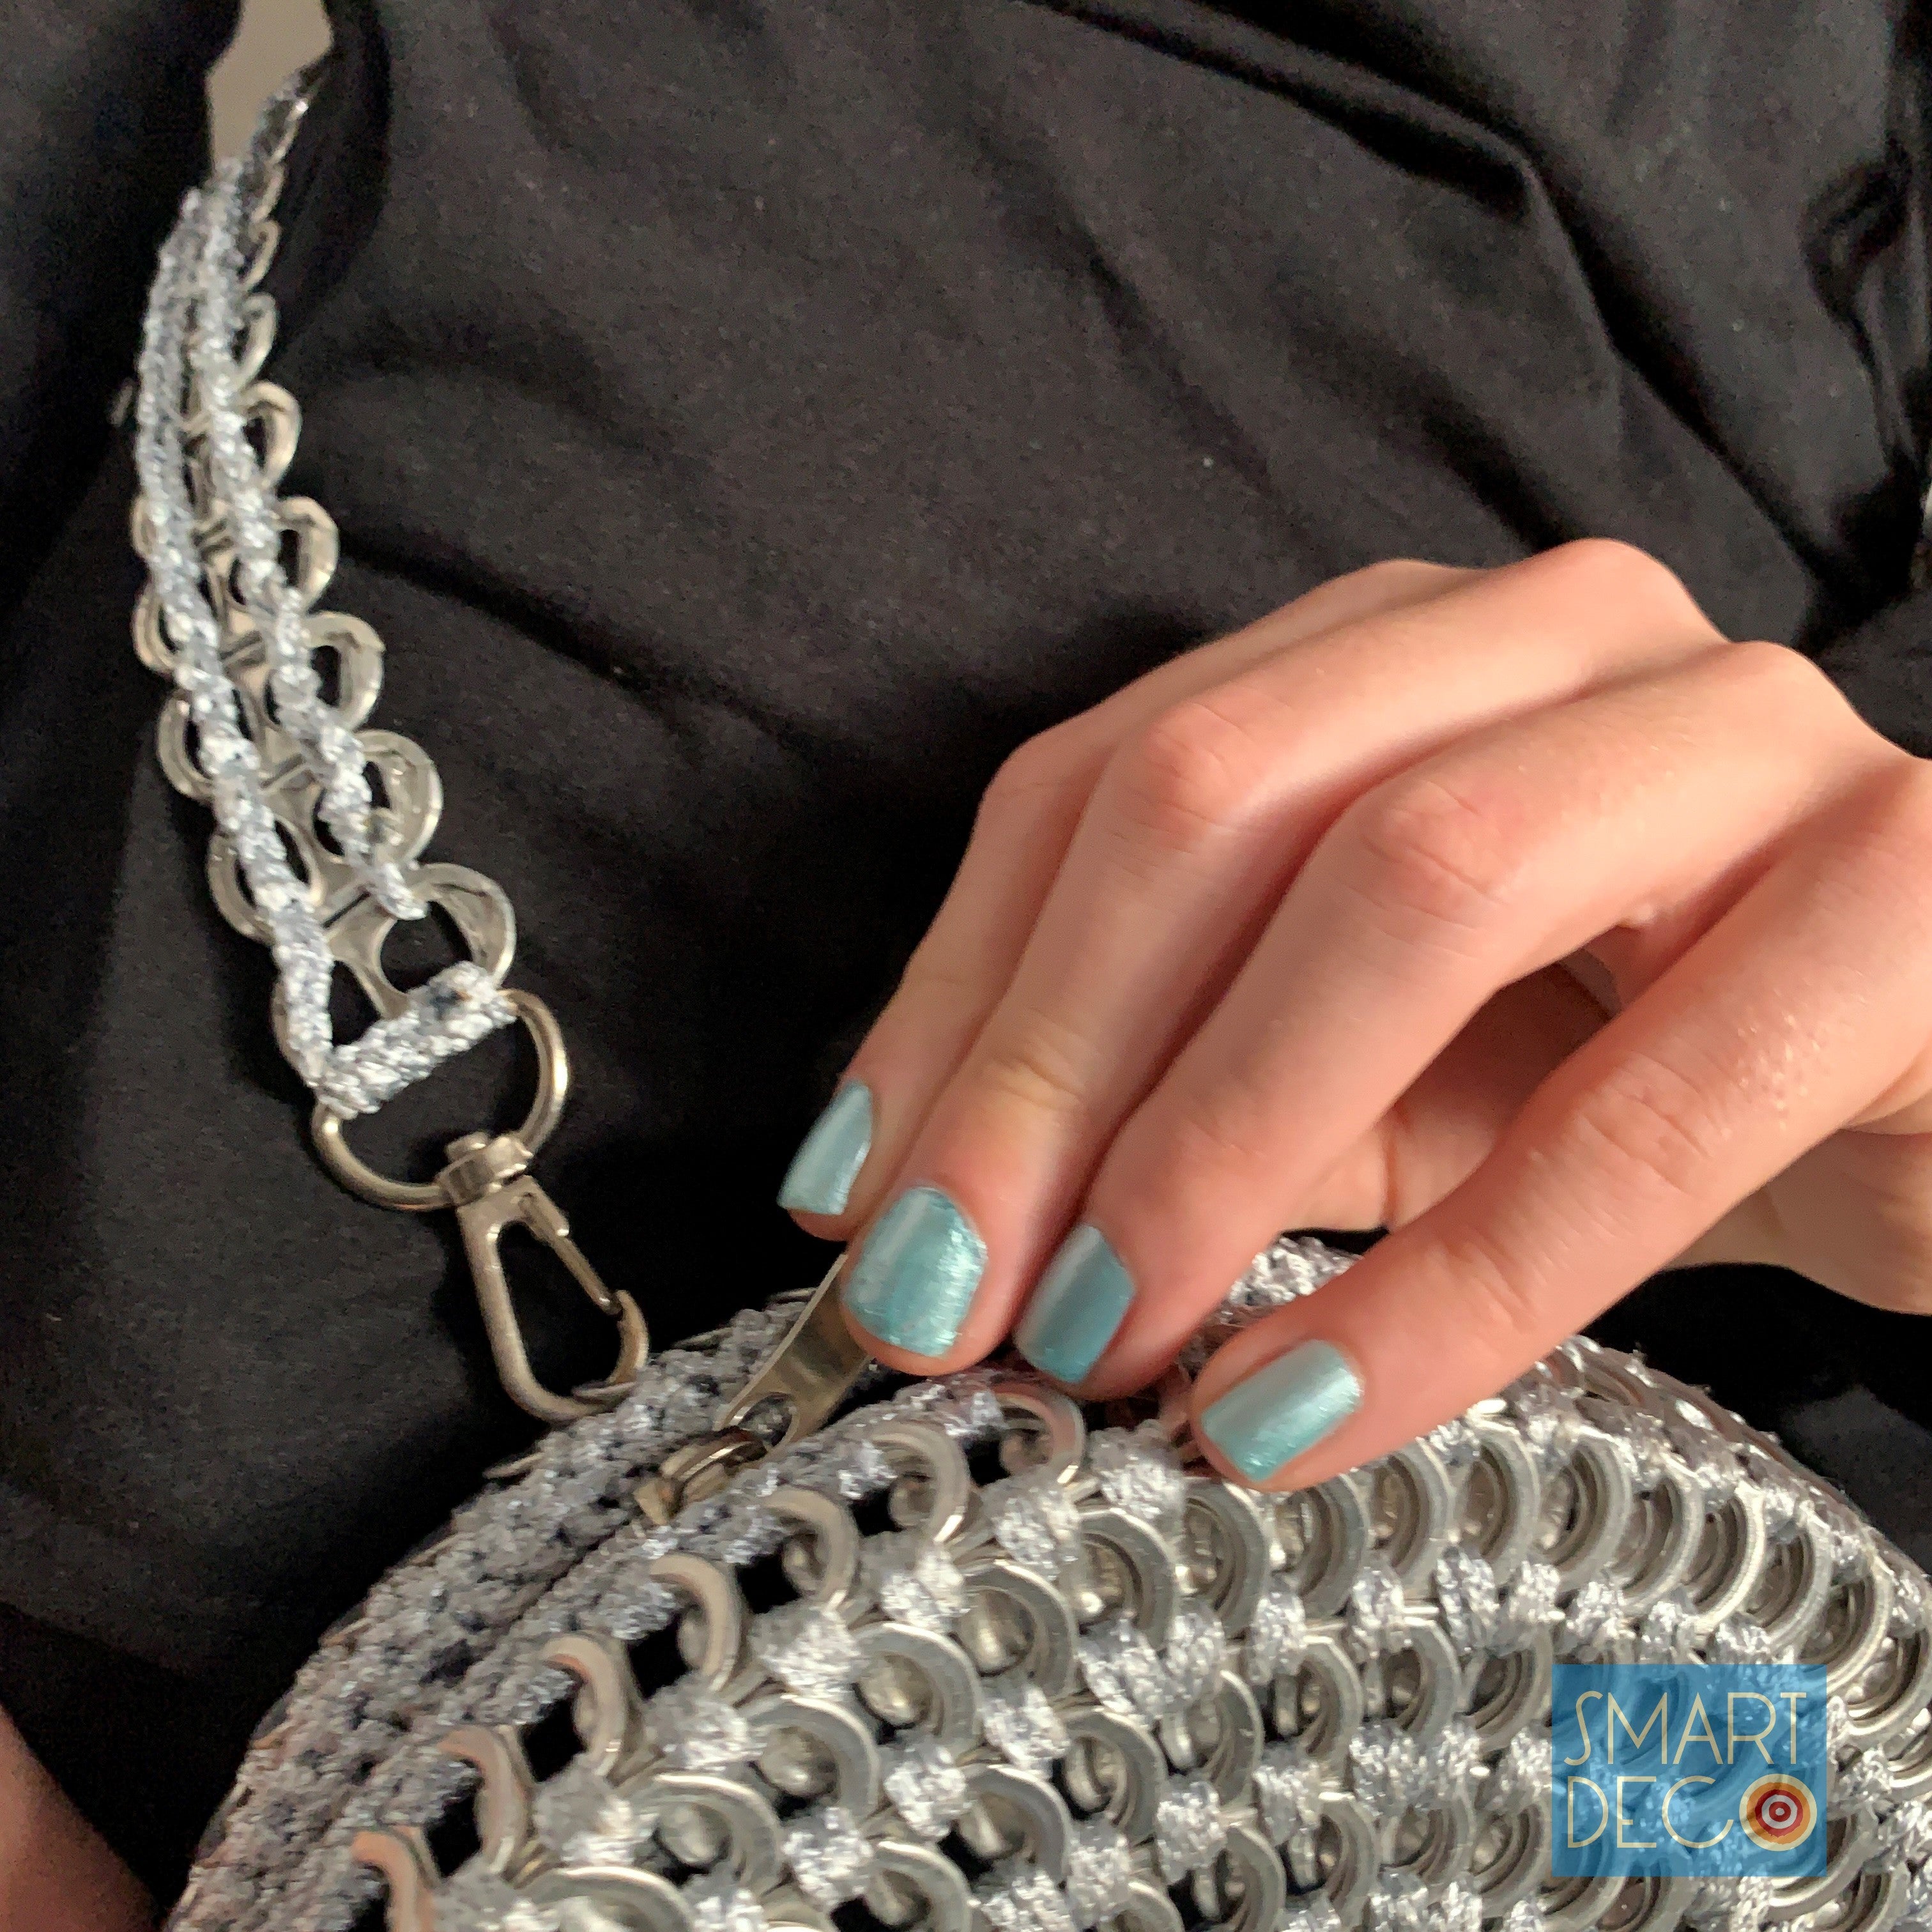 Soda Pop Daisy Chain Bag - Handmade with Metallic Silver Ring-Pulls